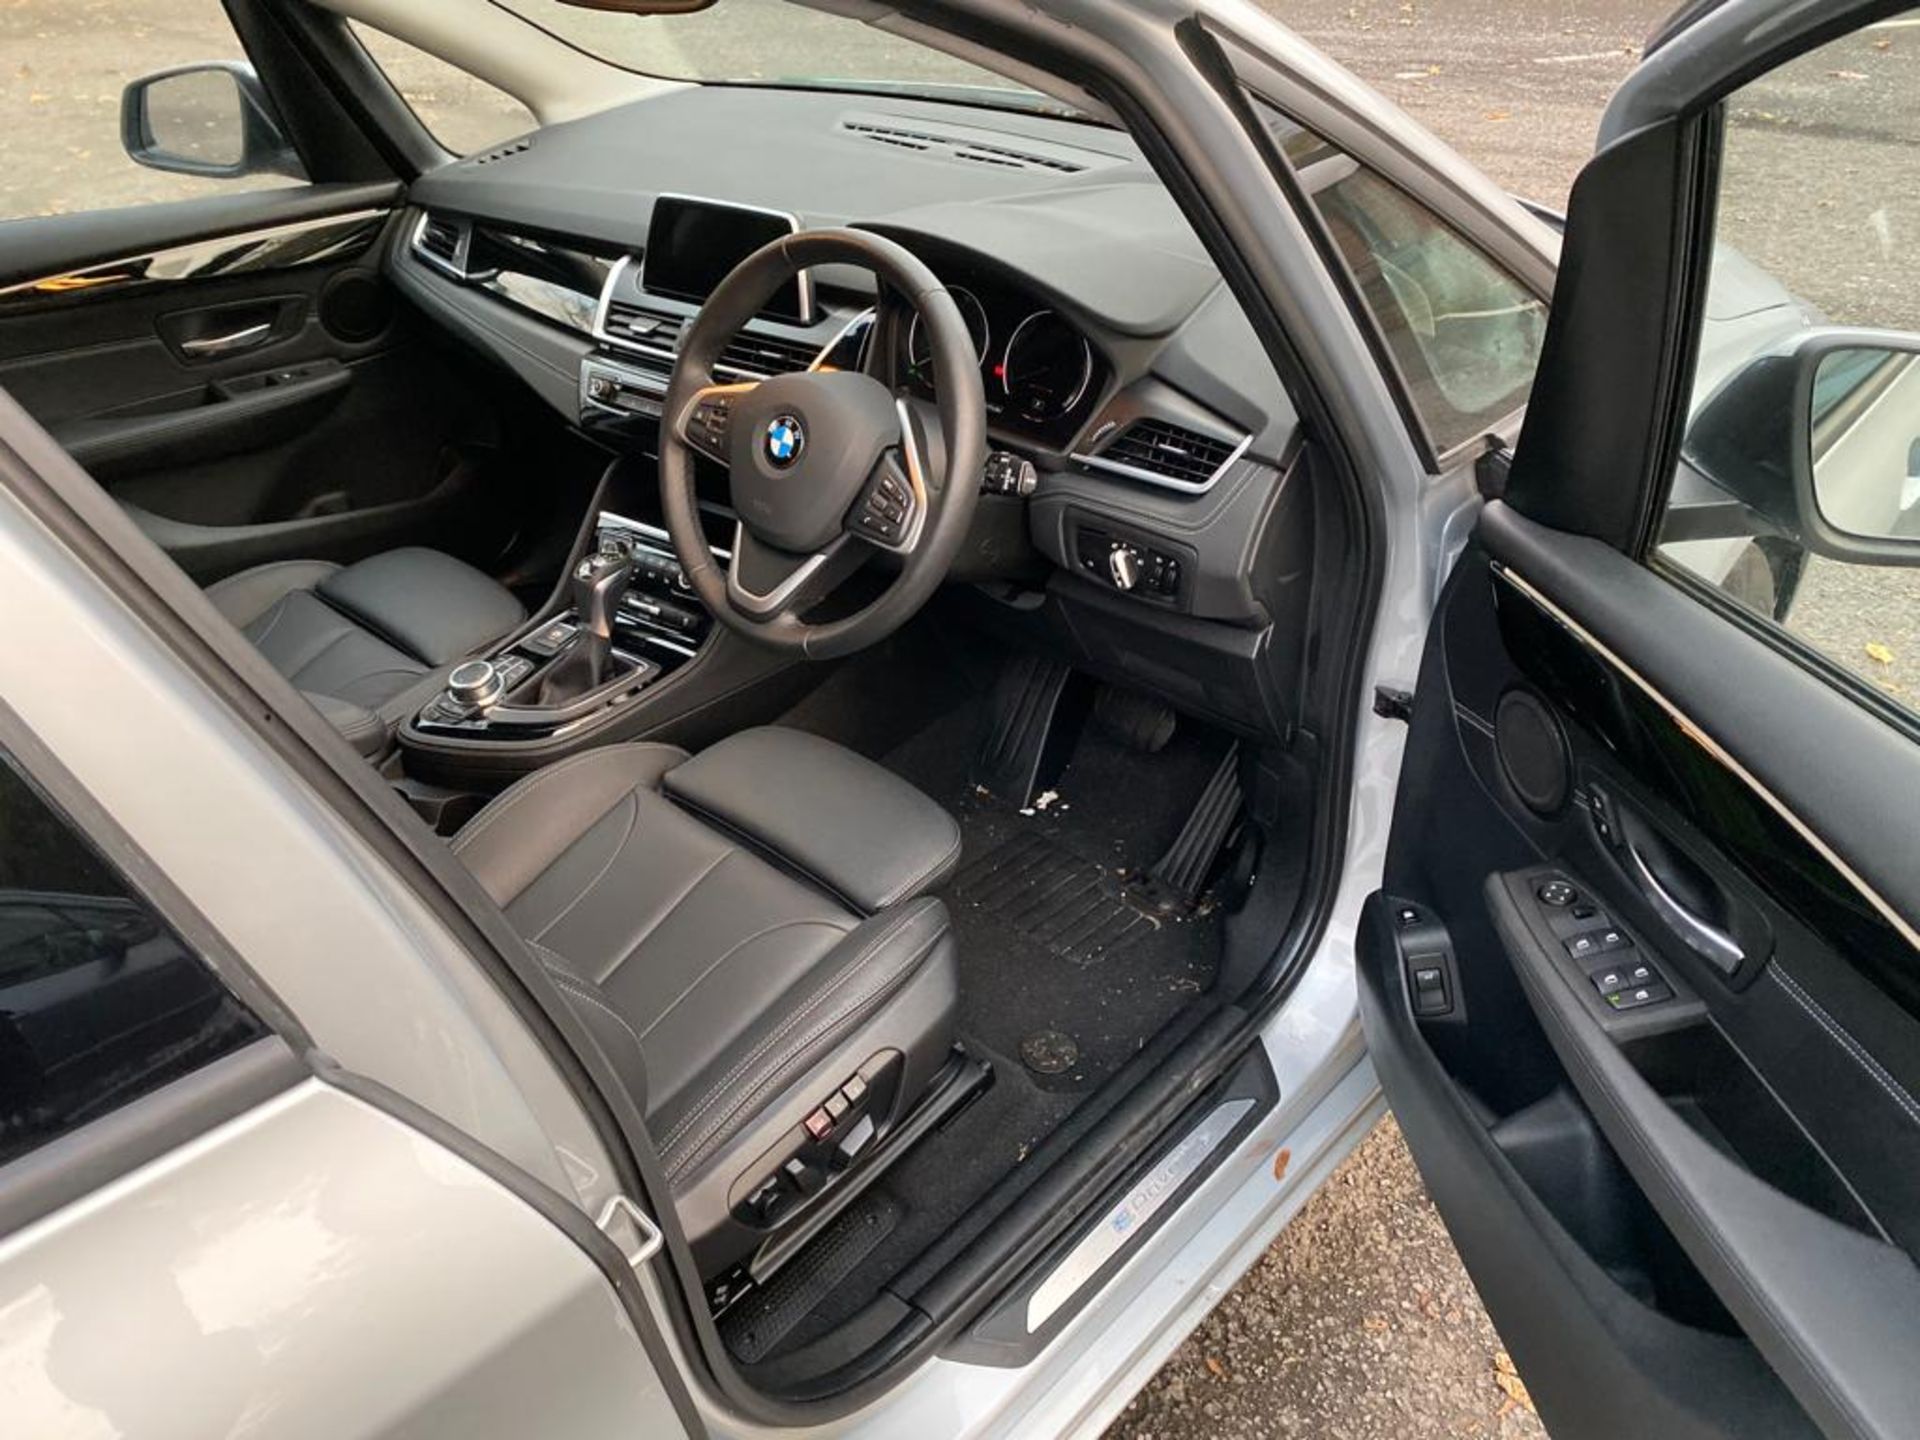 2019/68 REG BMW 225XE SPORT PREMIUM AUTOMATIC 1.5 HYBRID ELECTRIC SILVER 5 DOOR HATCHBACK *PLUS VAT* - Image 11 of 17